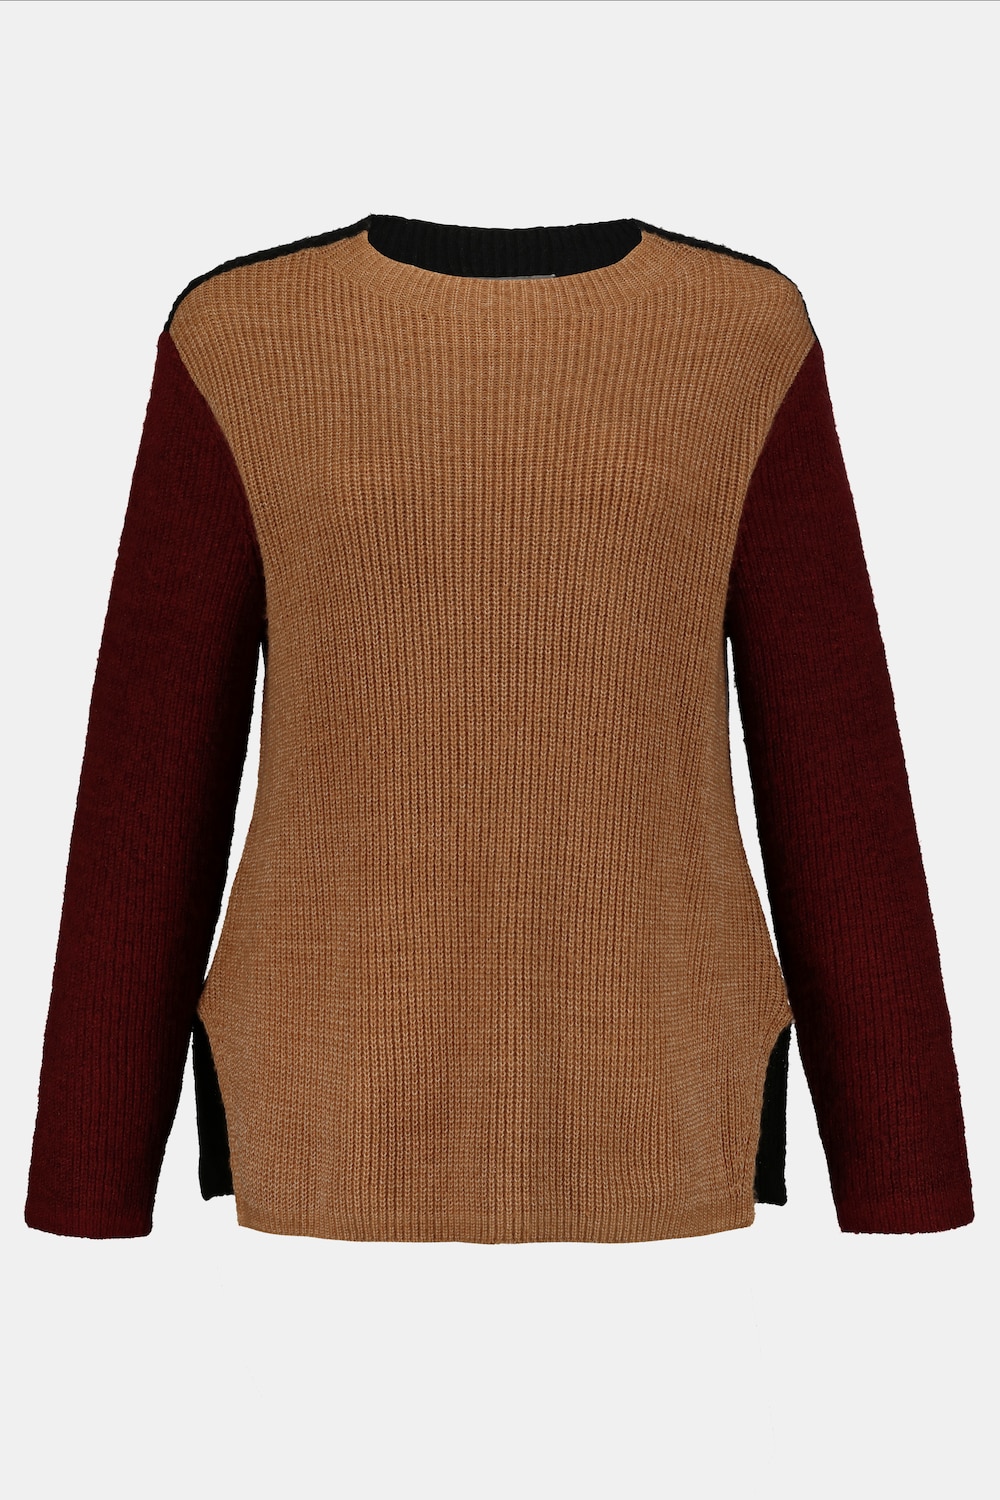 Plus Size Trendy Color Block Long Sleeve Sweater, Woman, brown, size: 24/26, synthetic fibers/polyester, Ulla Popken